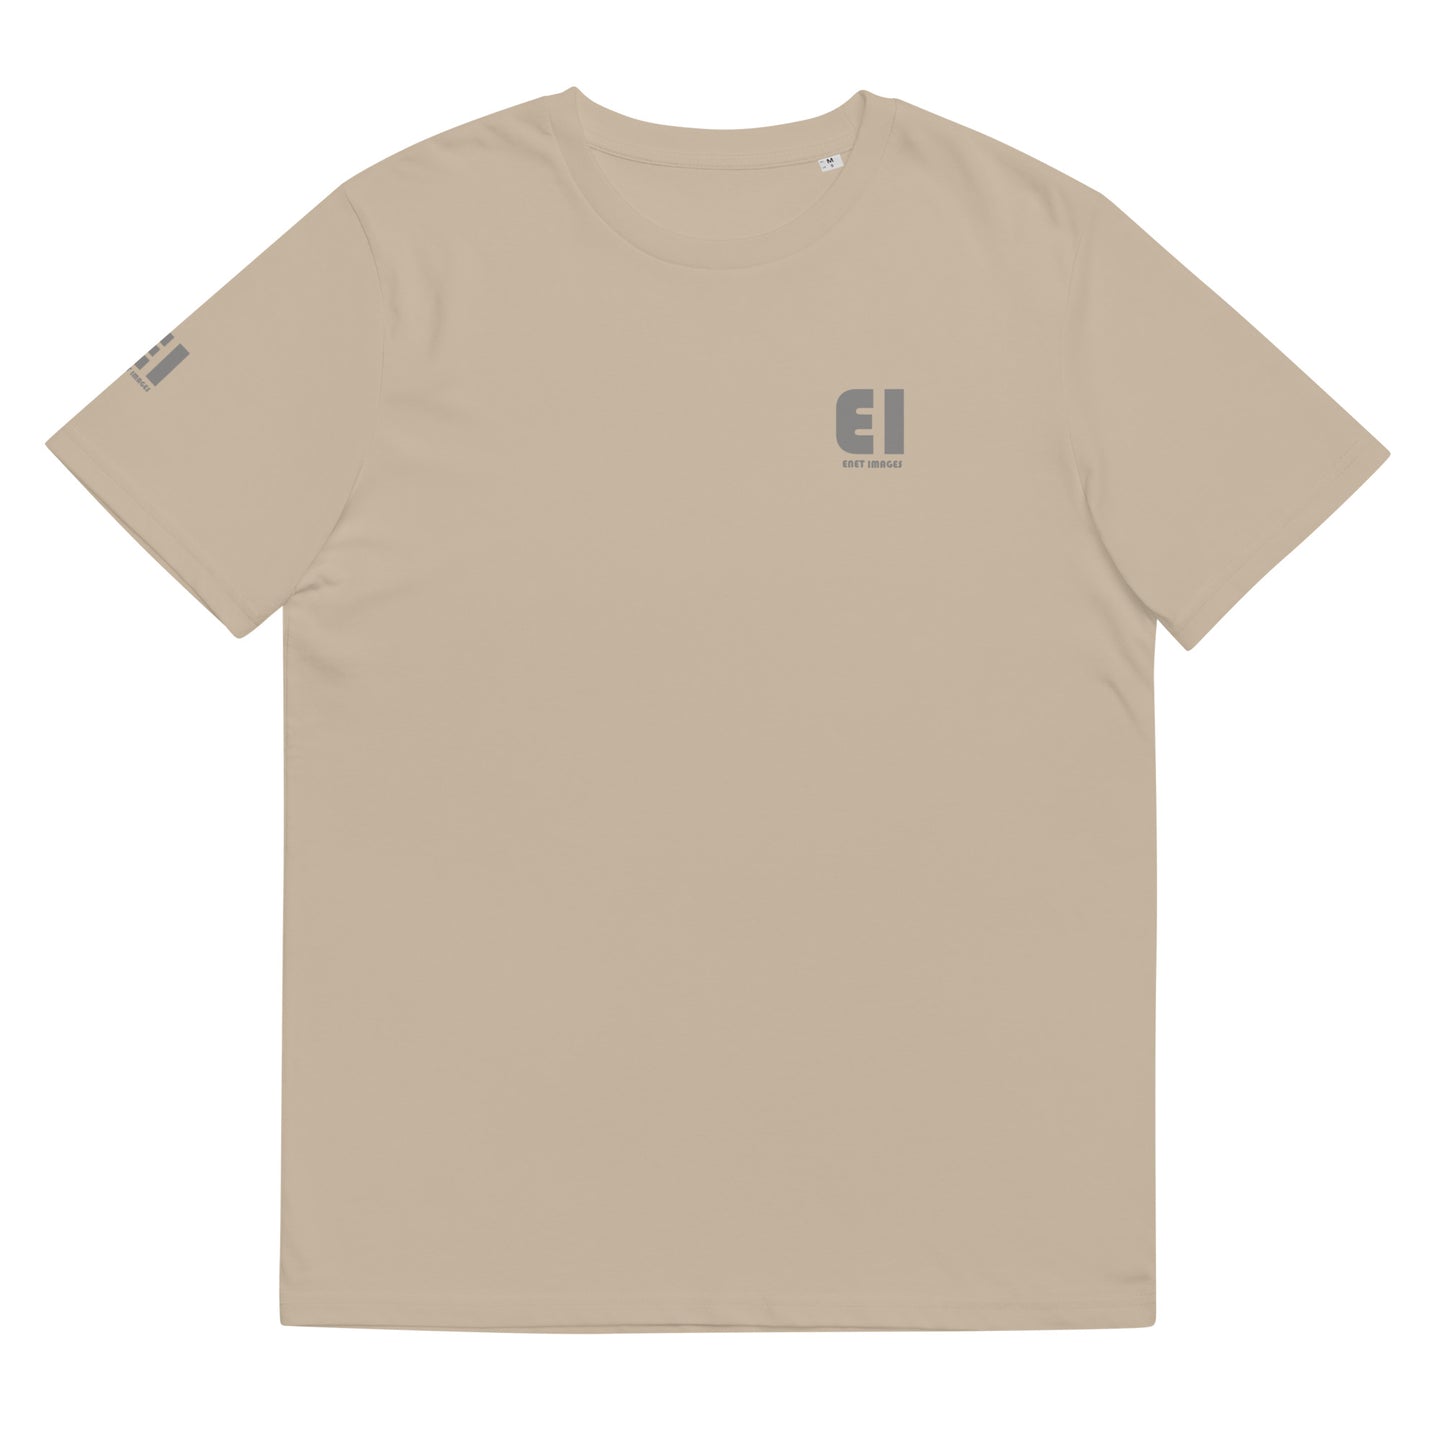 Unisex-T-Shirt aus Bio-Baumwolle/Enet-Images-Grau